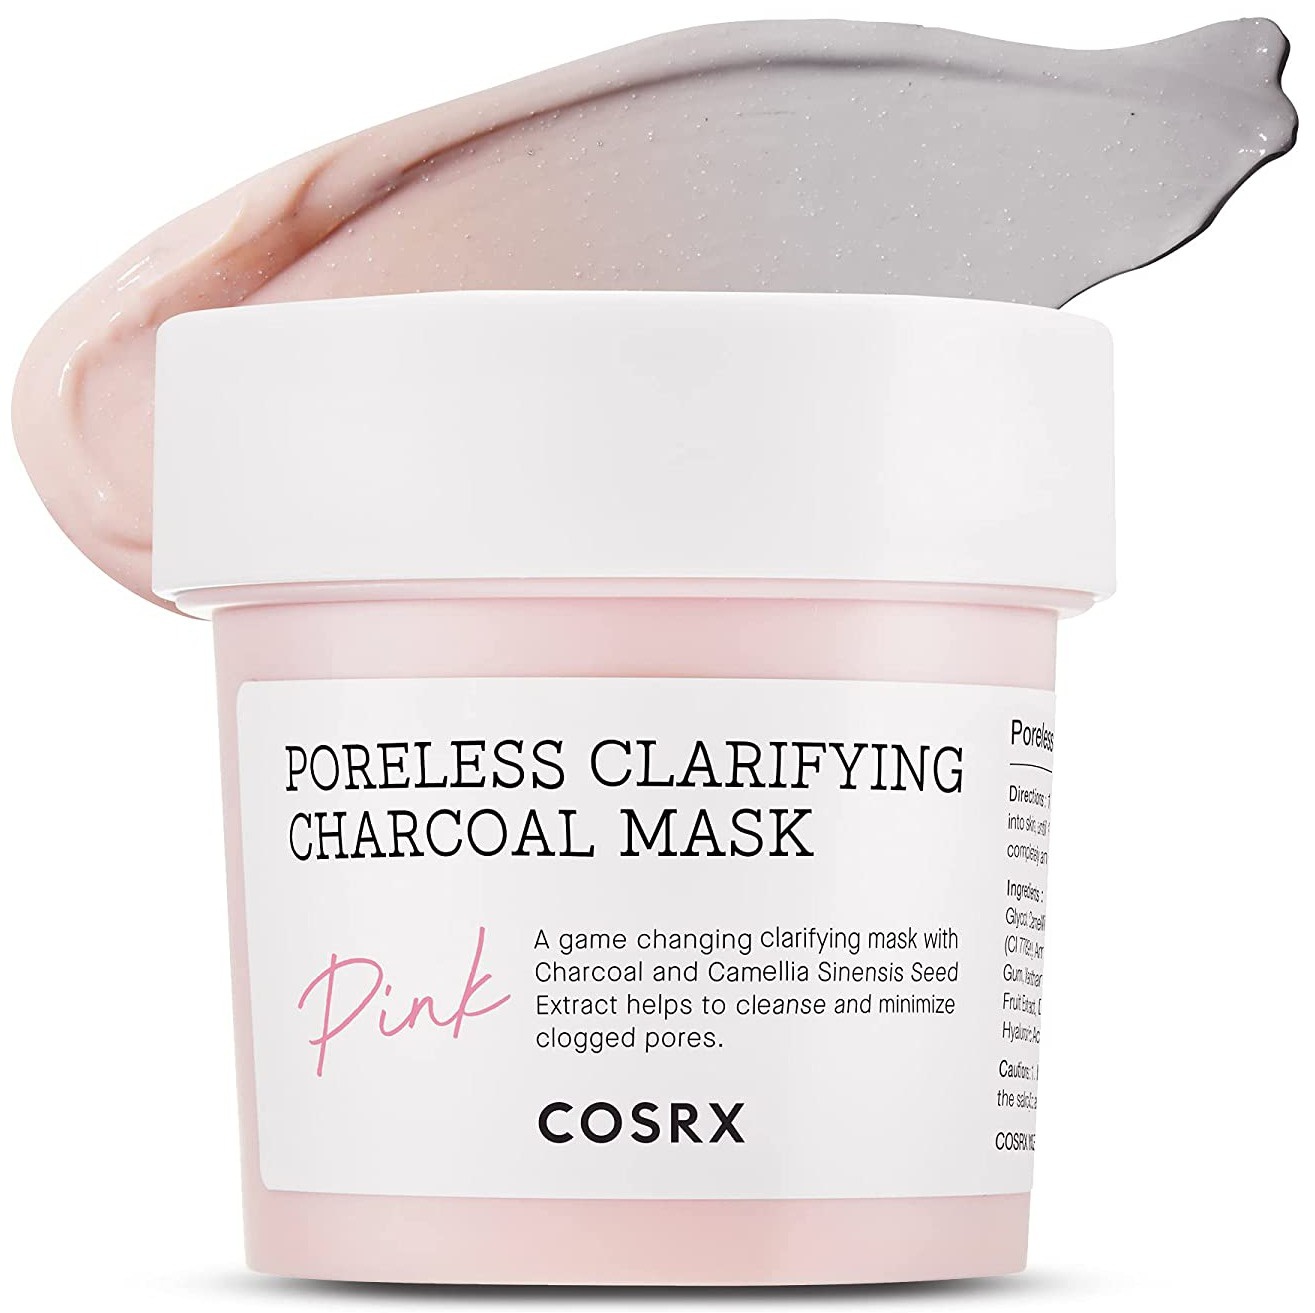 COSRX Poreless Clarifying Charcoal Mask